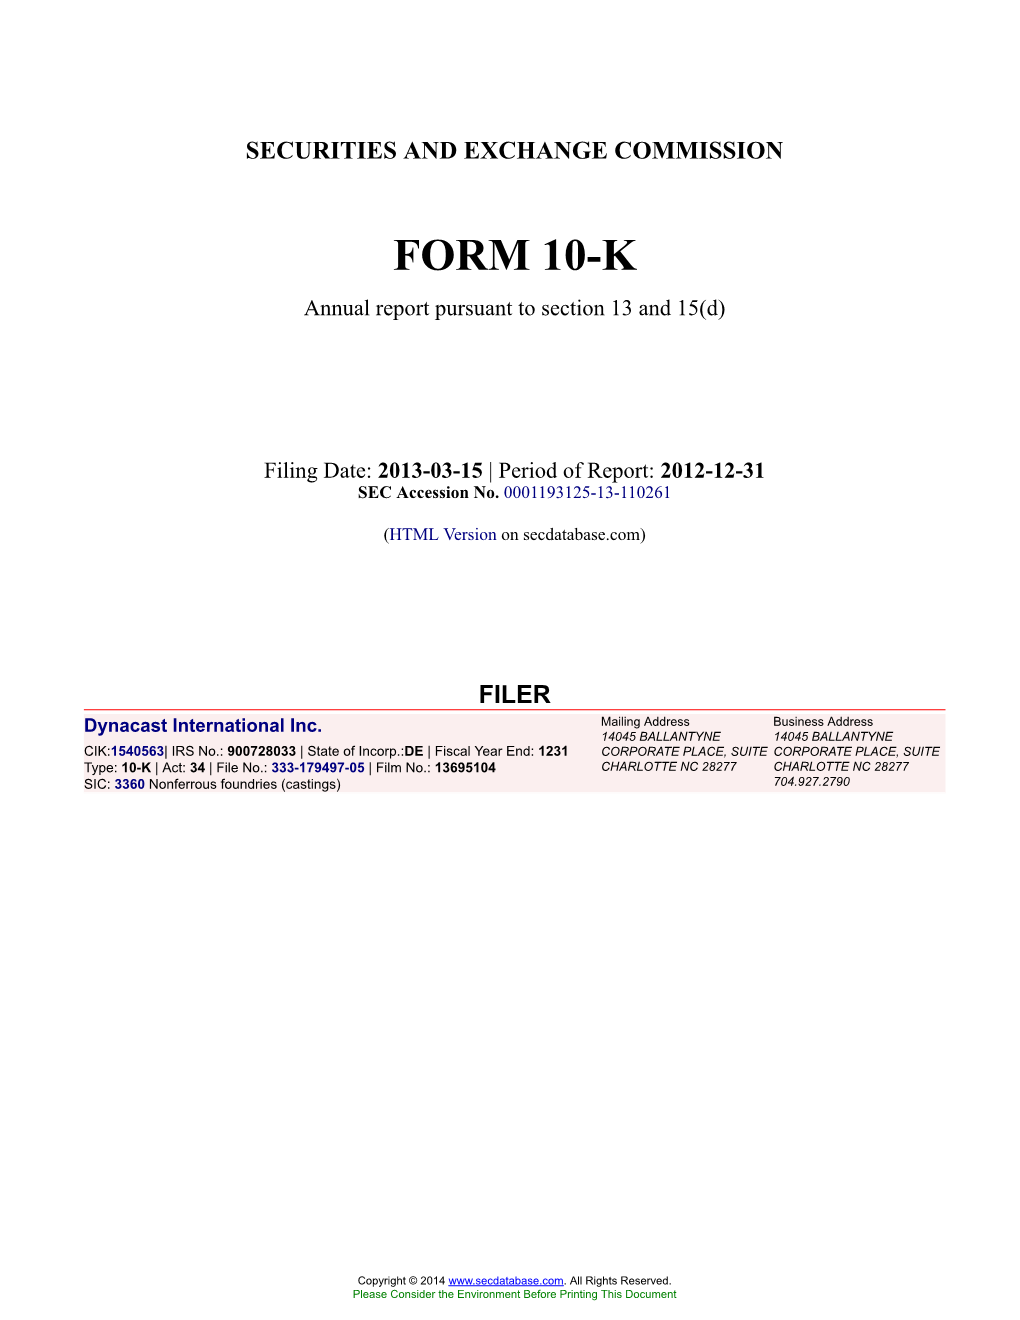 Dynacast International Inc. Form 10-K Annual Report Filed 2013-03-15